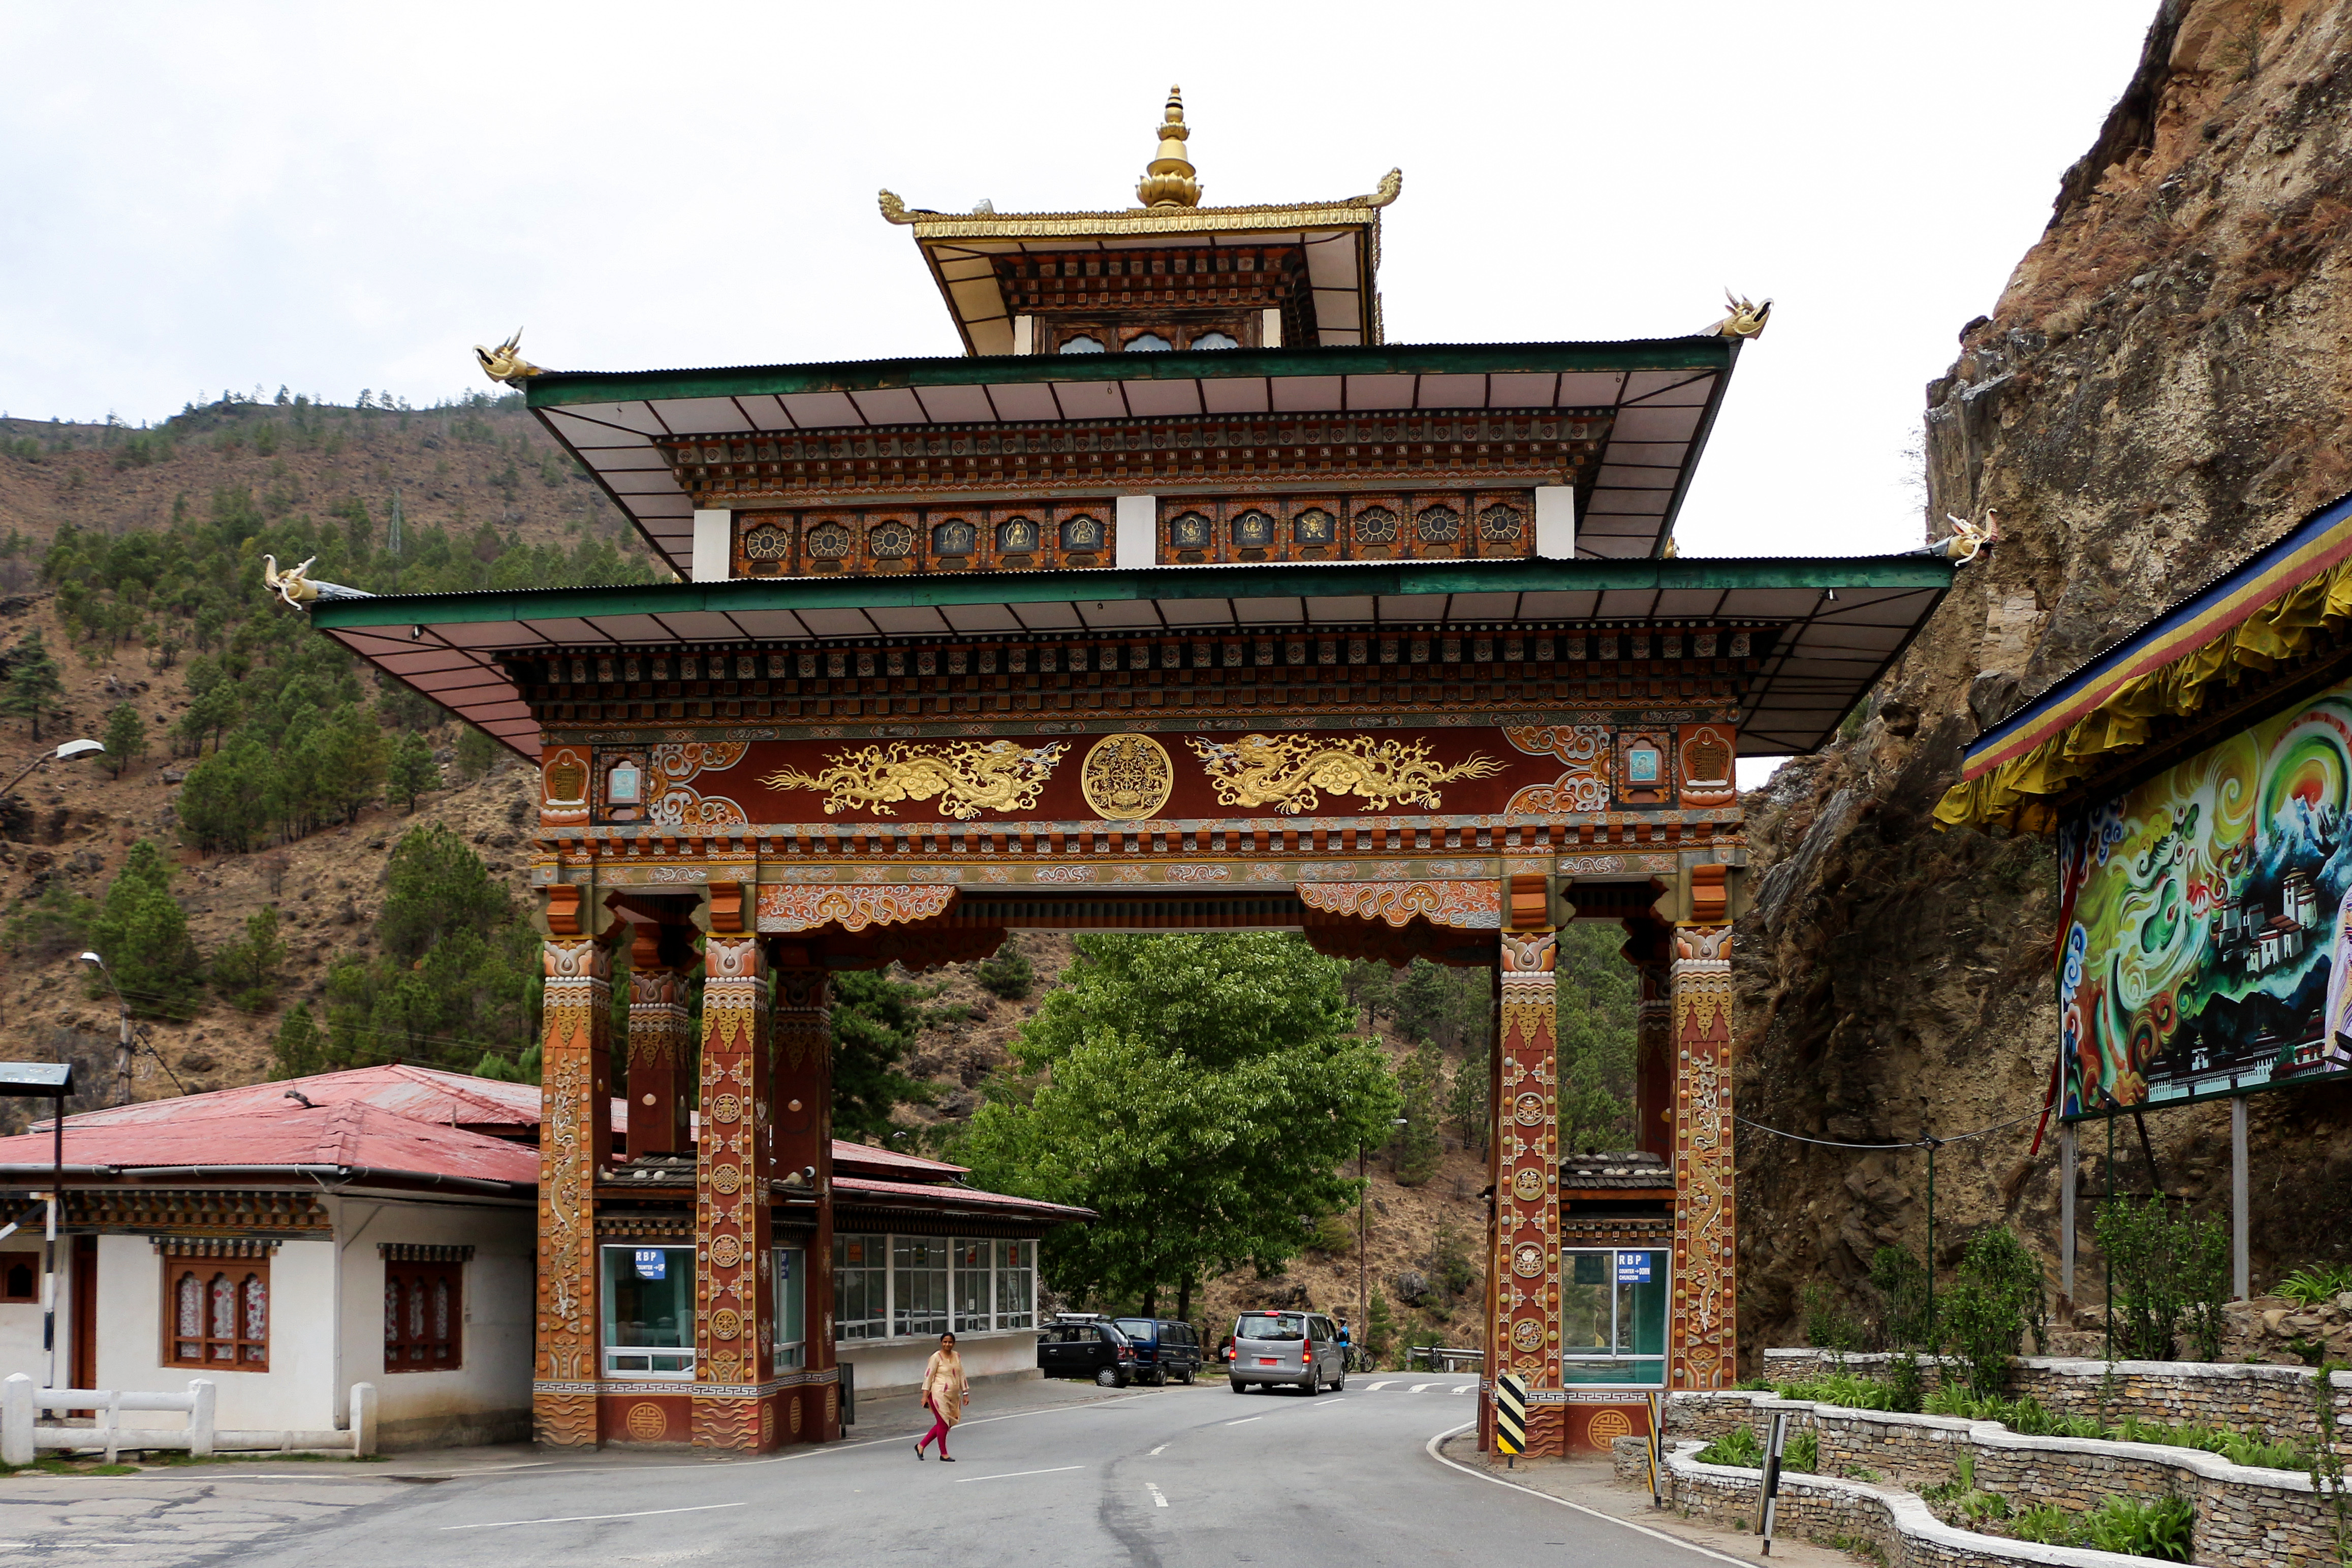 1593940106_best-time-to-visit-bhutan-banner.jpg